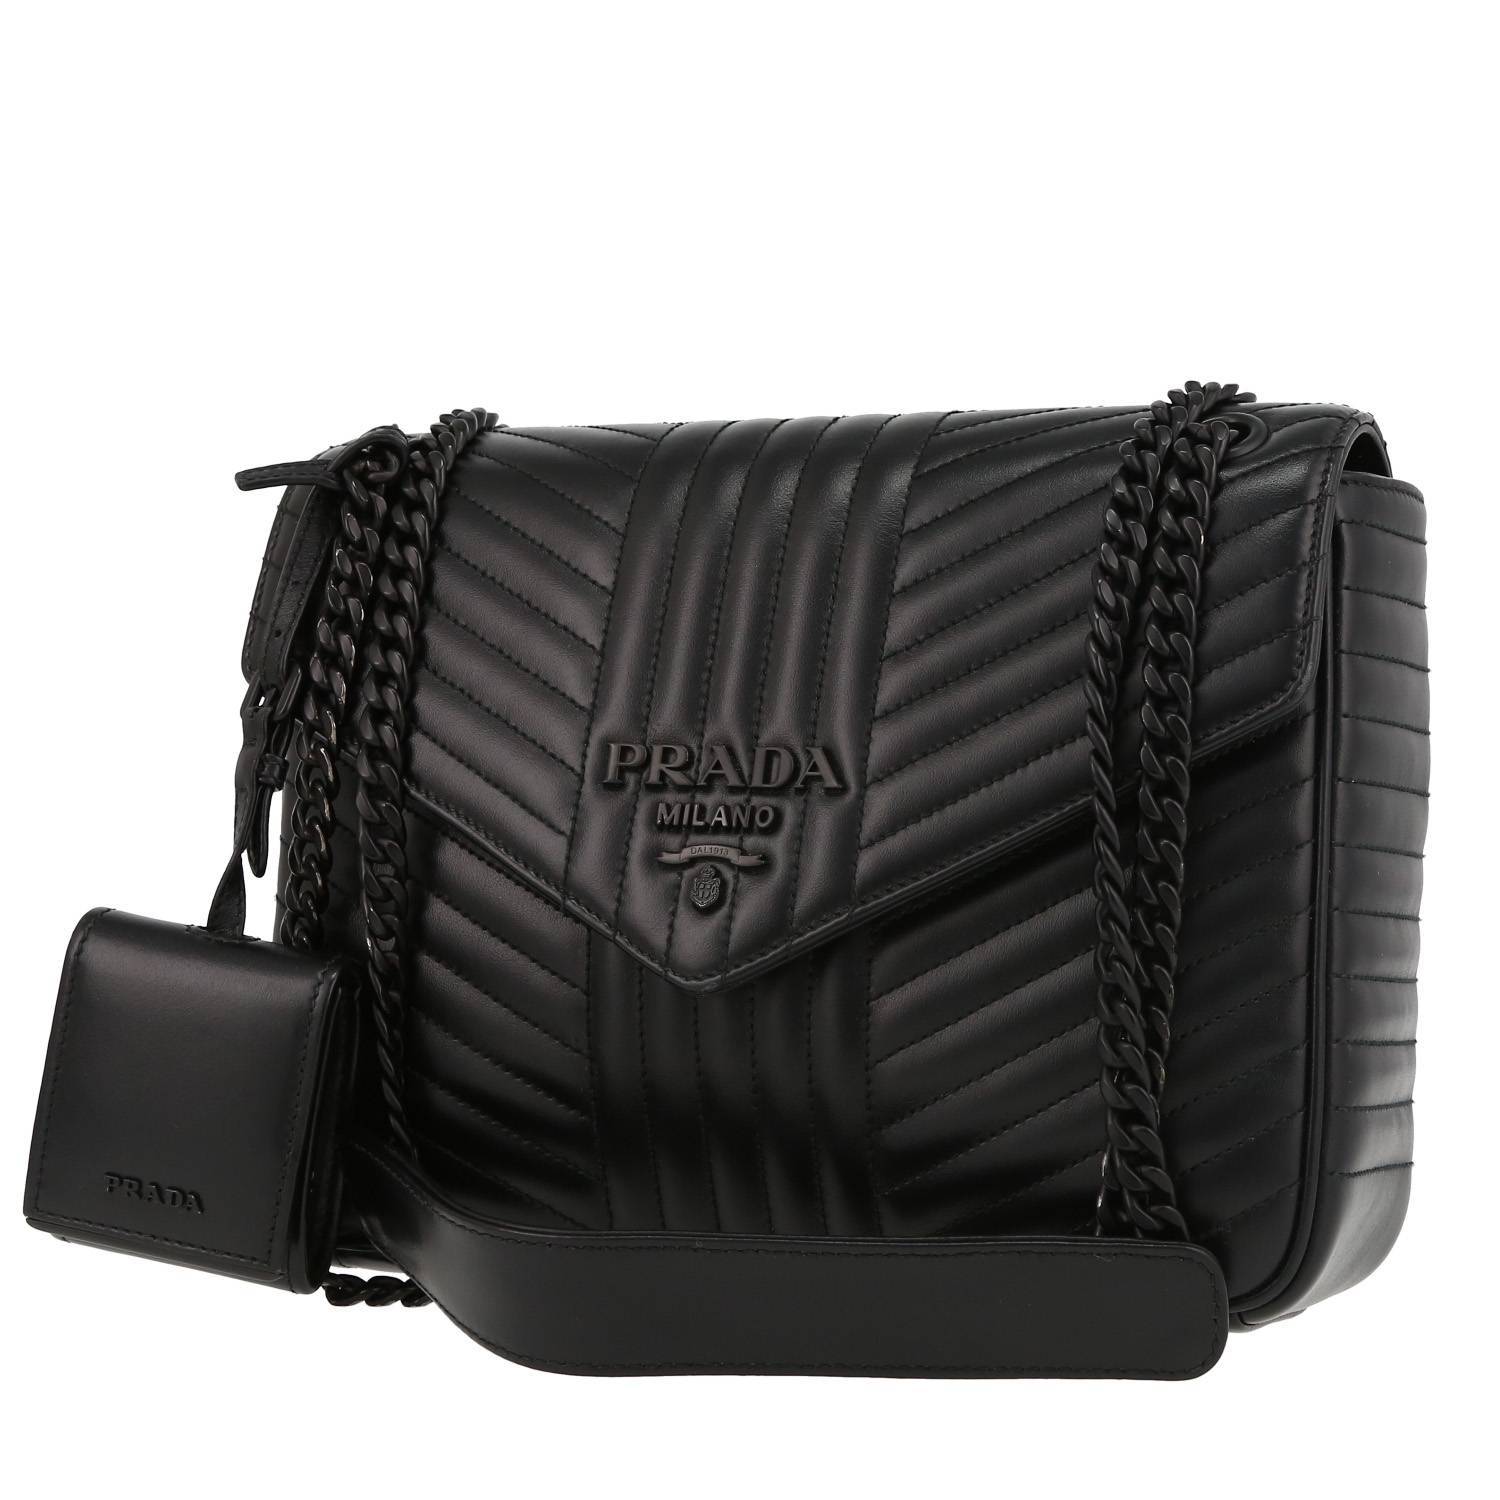 Diagramme Shoulder Bag In Black Quilted Leather